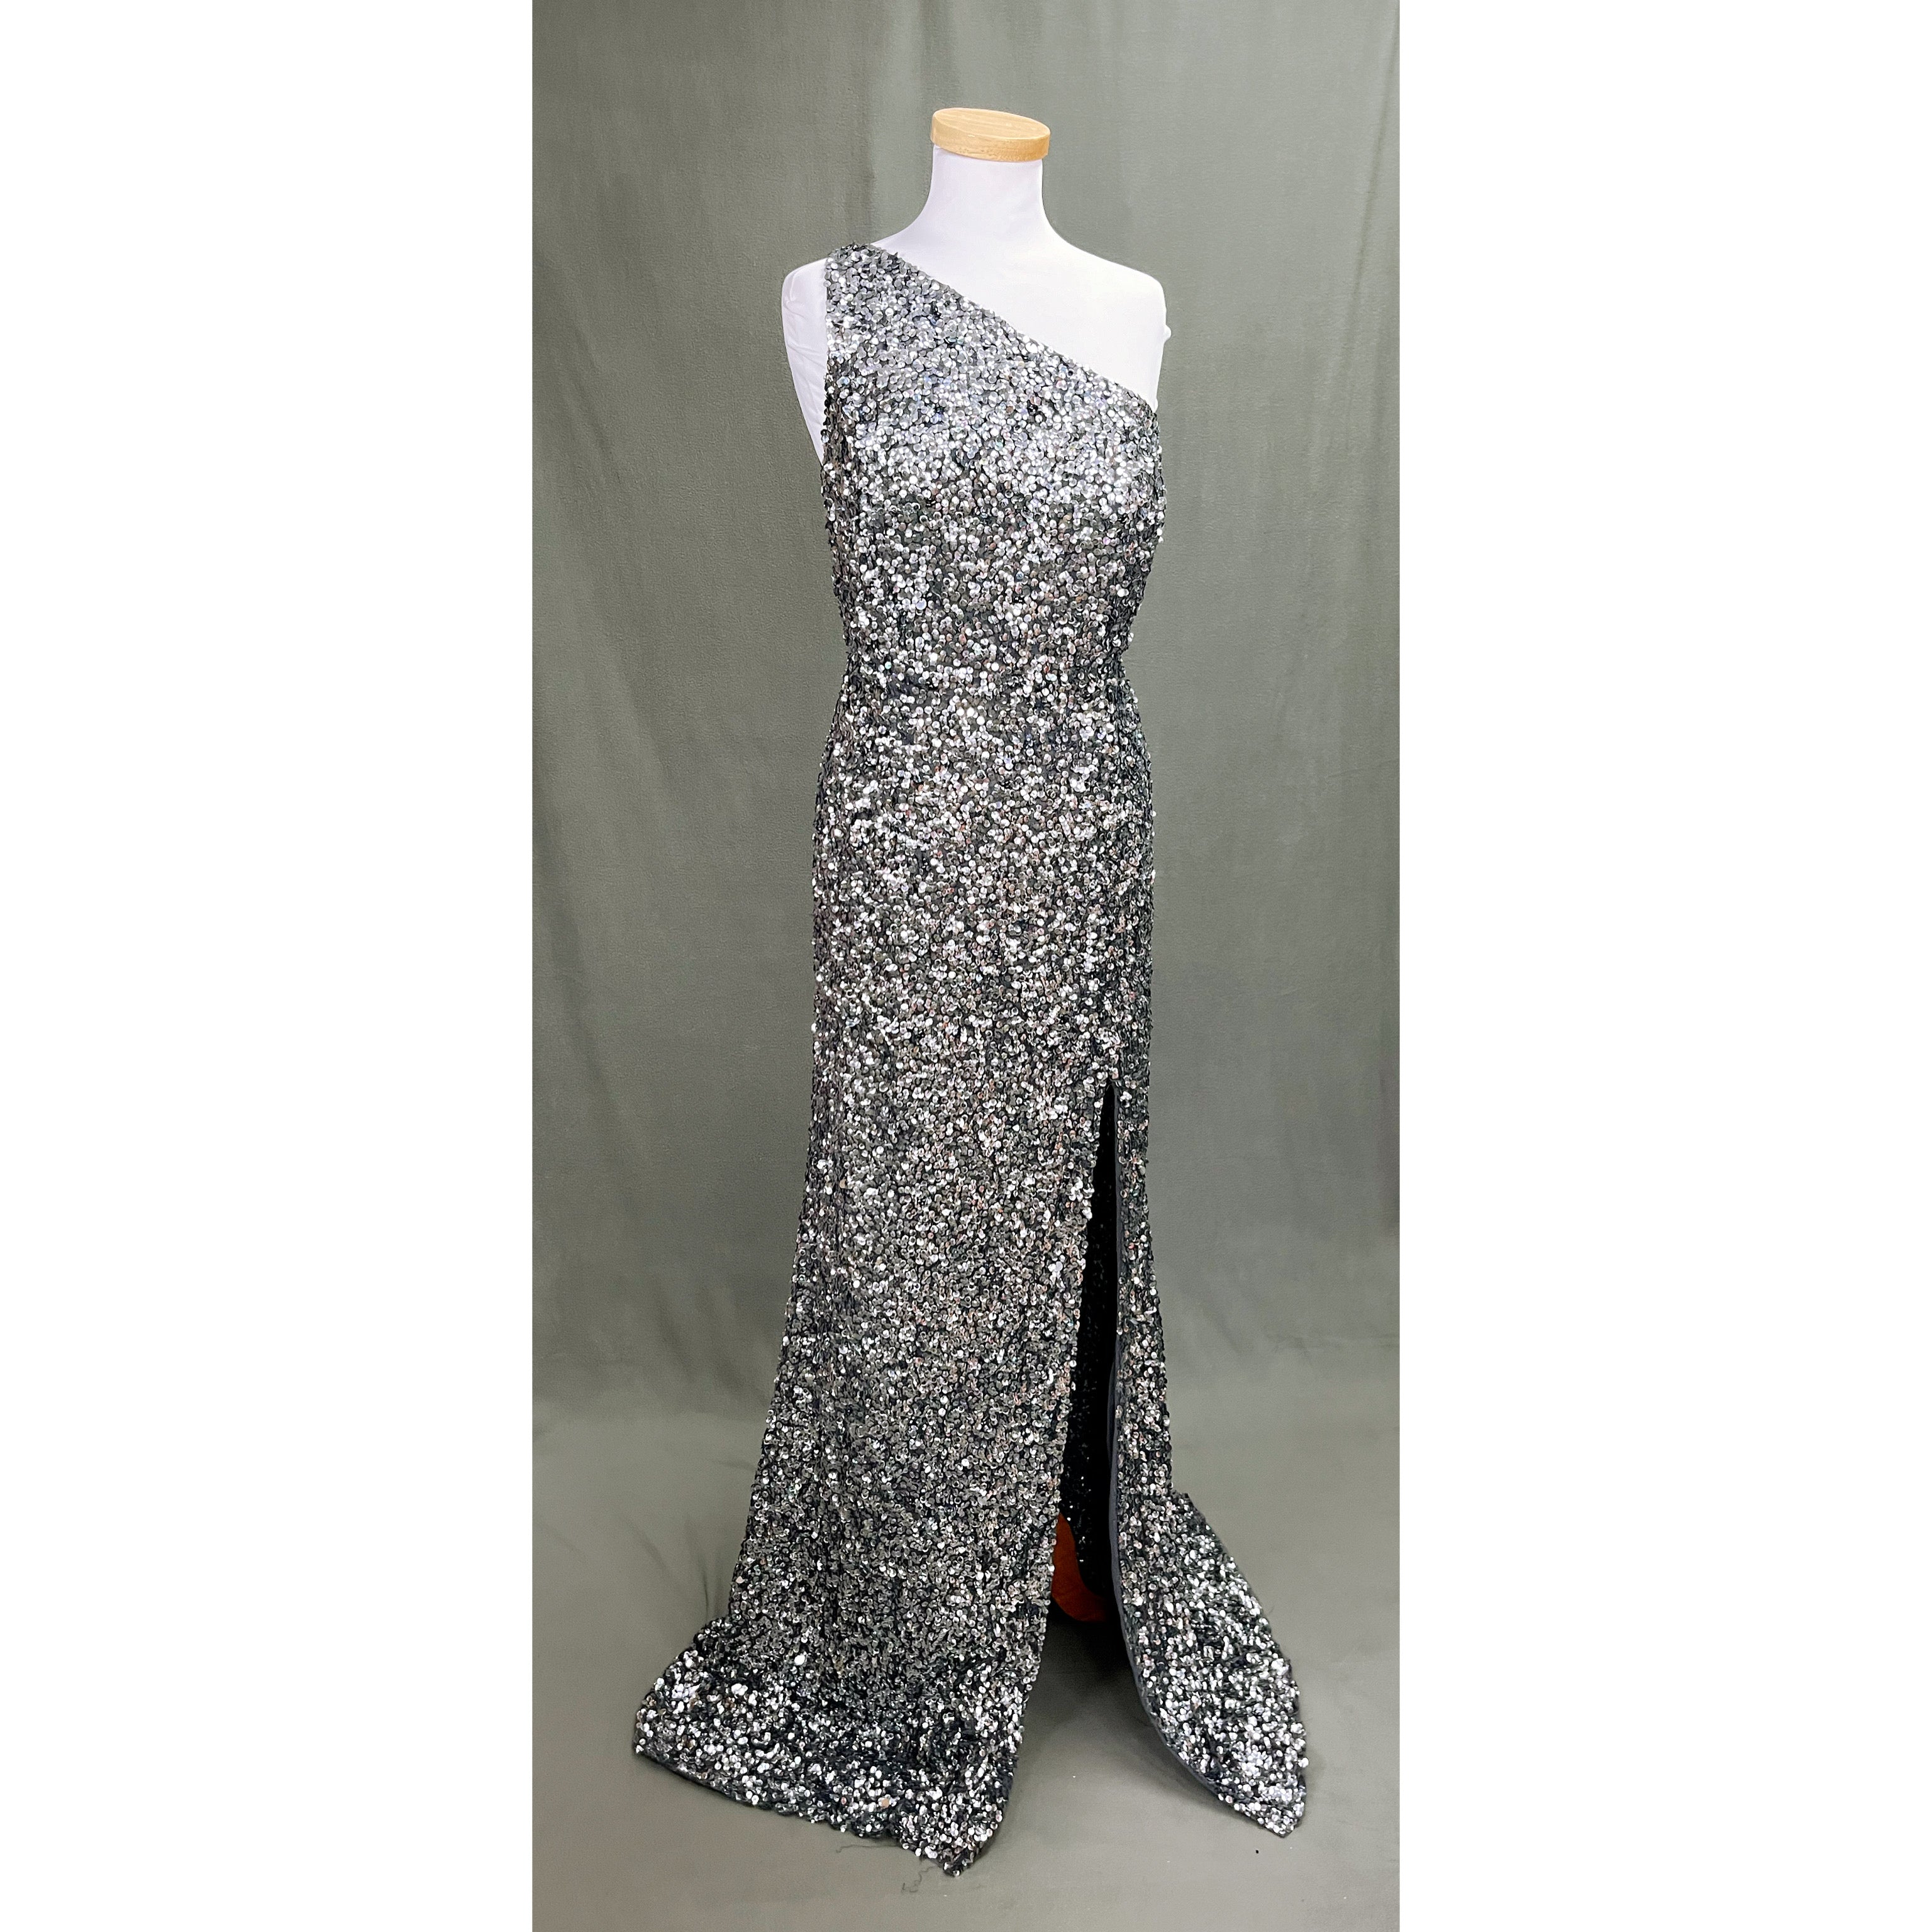 Sherri Hill gunmetal sequin dress, size 18